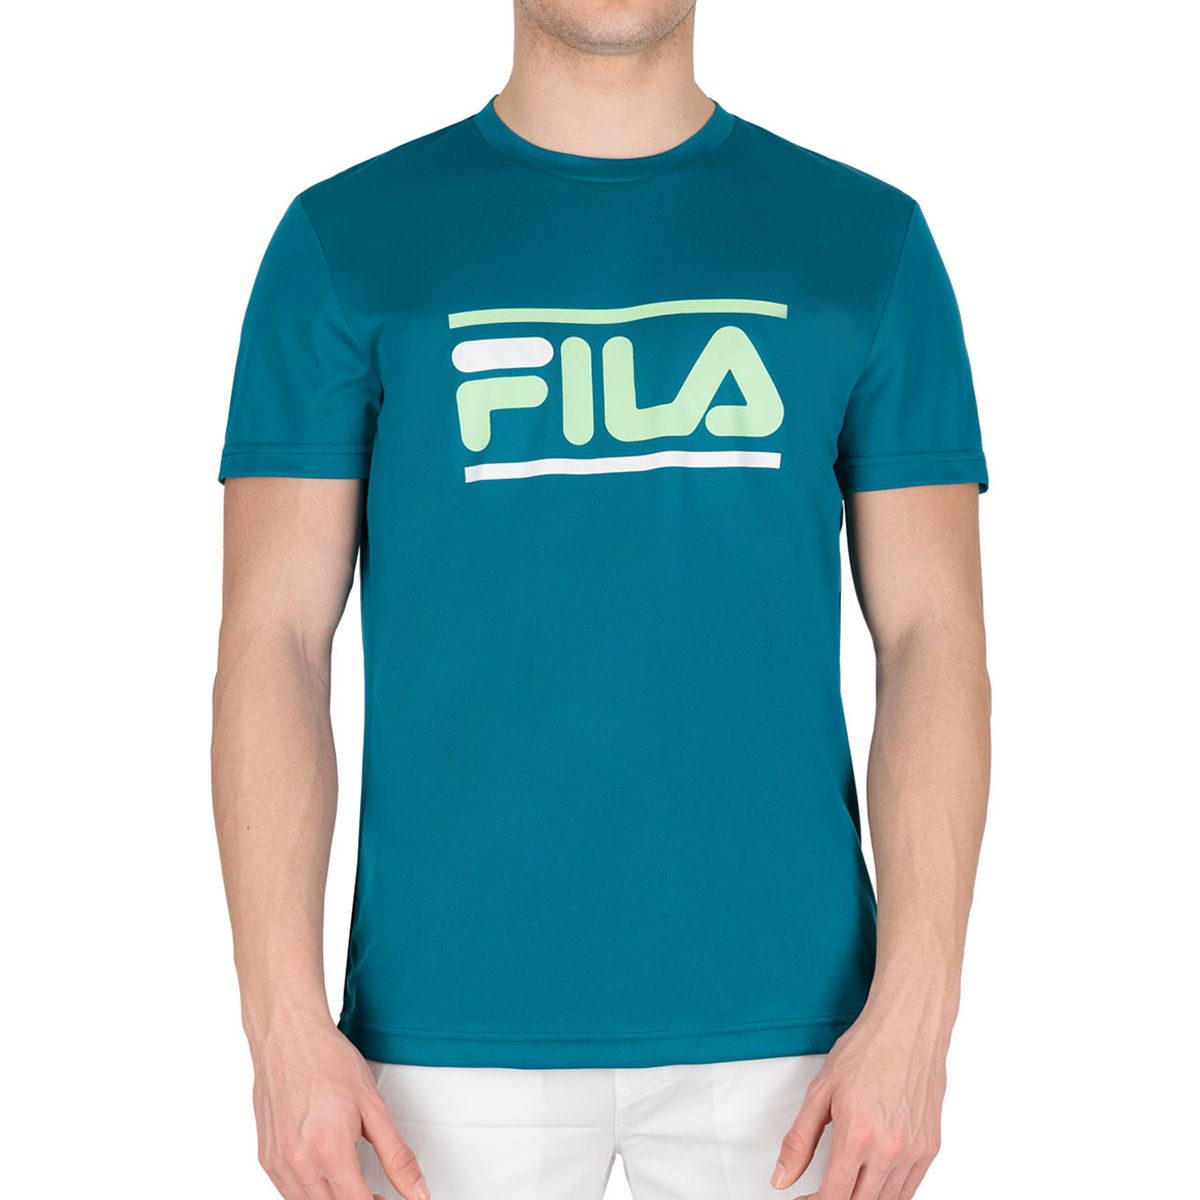 Fila Emilio Men's Tennis T-Shirt XFM221039-1750